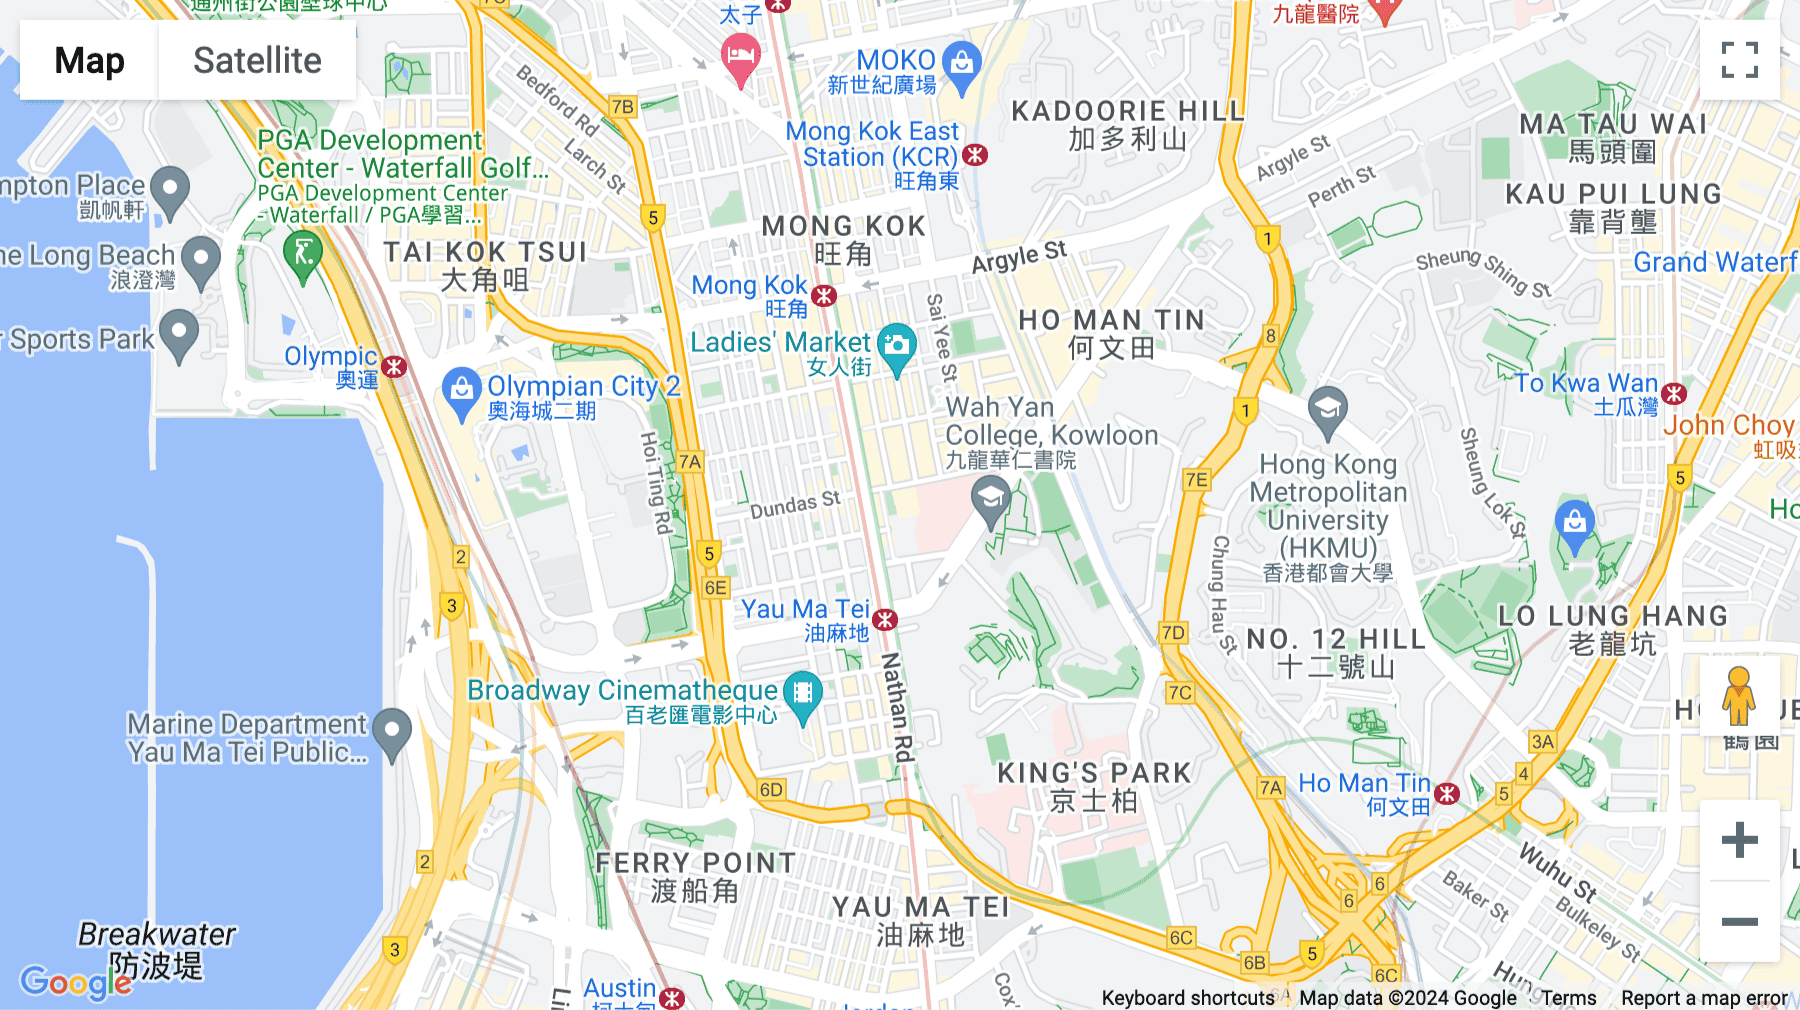 Click for interative map of 13F & 21F Gala Place, 56 Dundas Street, Mong Kok, Hong Kong